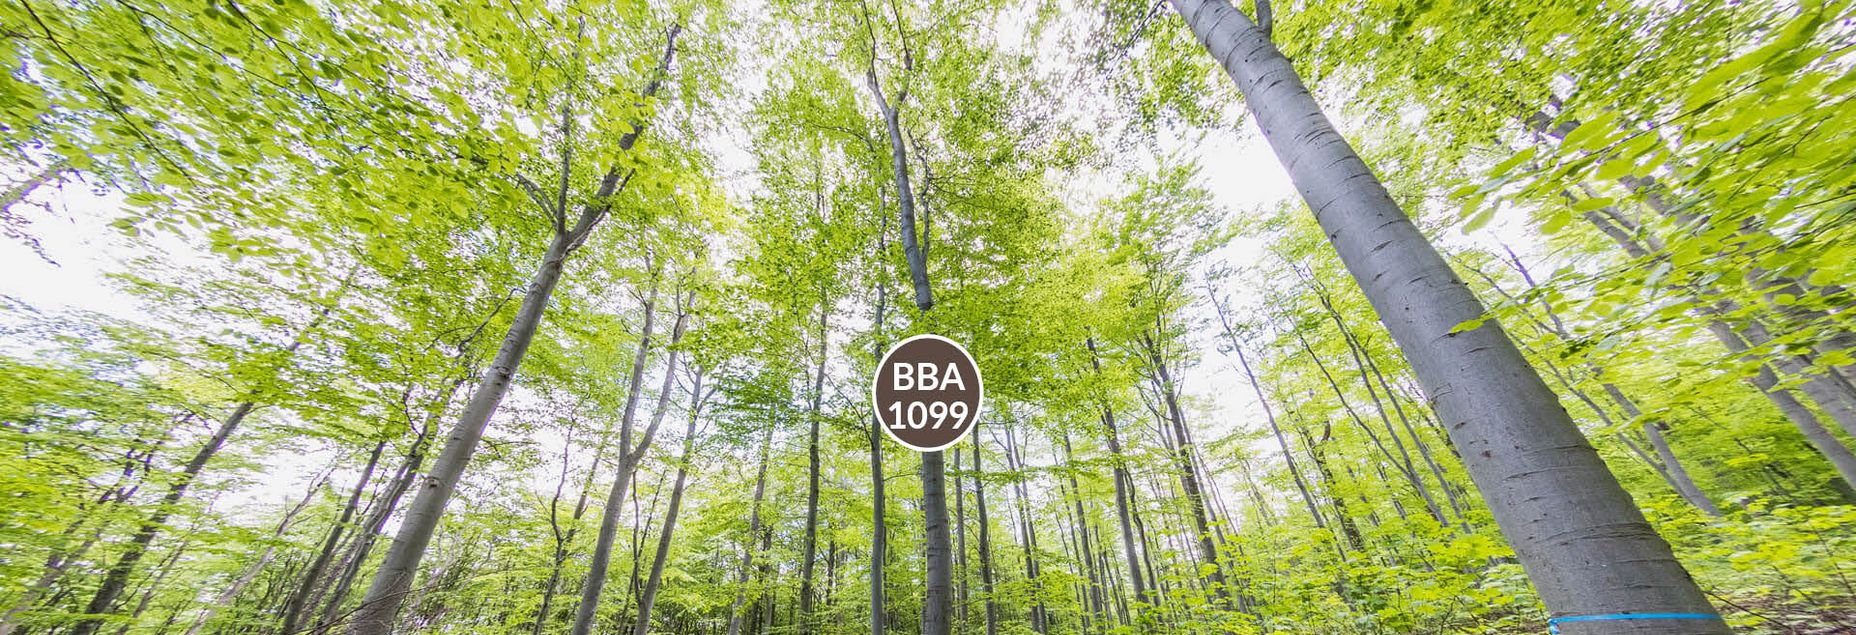 Baum BBA 1099 - Fisheyeperspektive